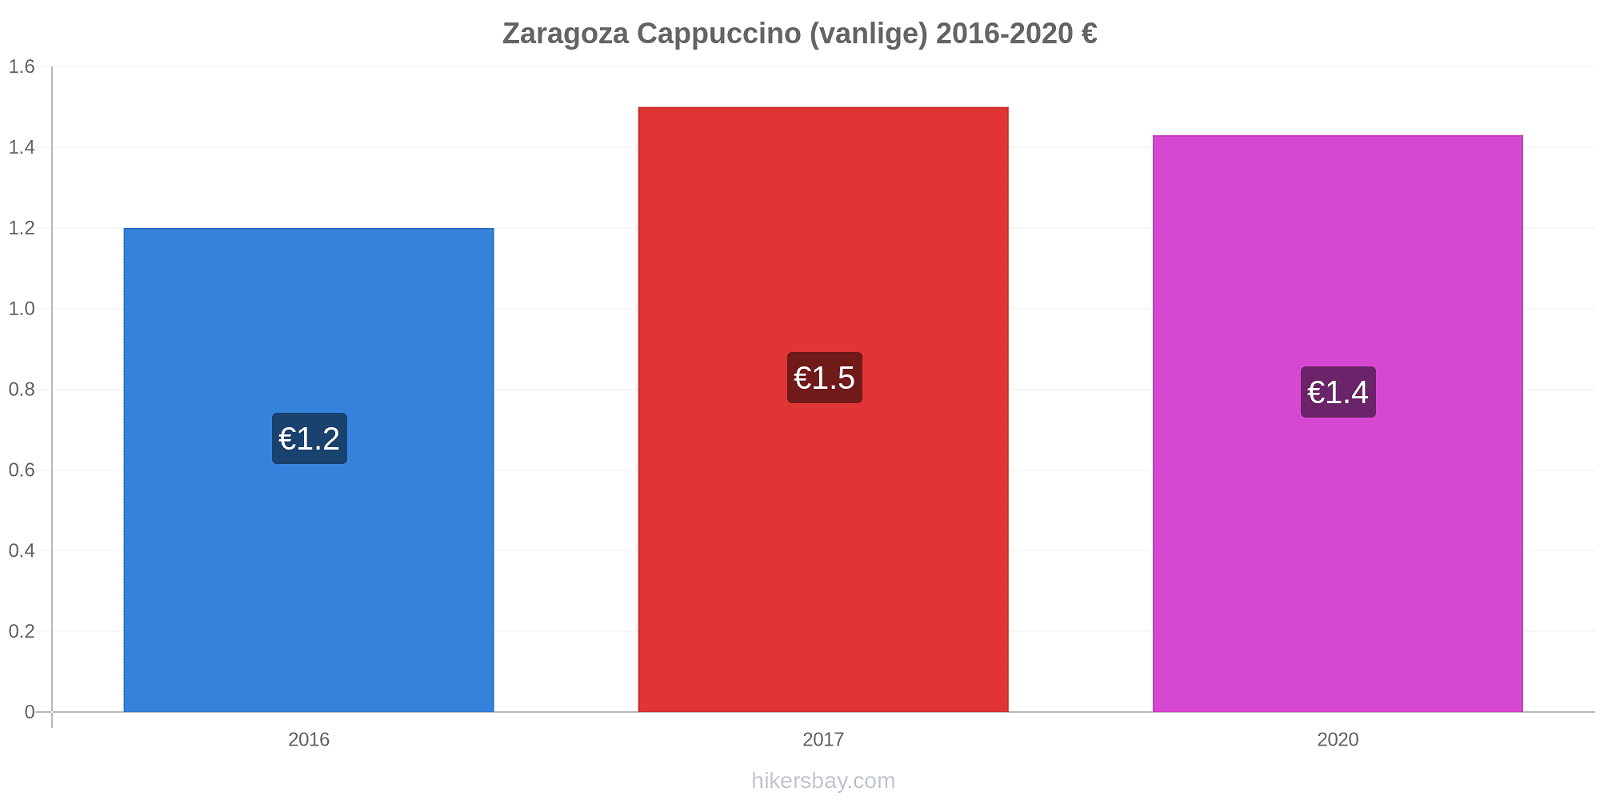 Zaragoza prisendringer Cappuccino (vanlige) hikersbay.com